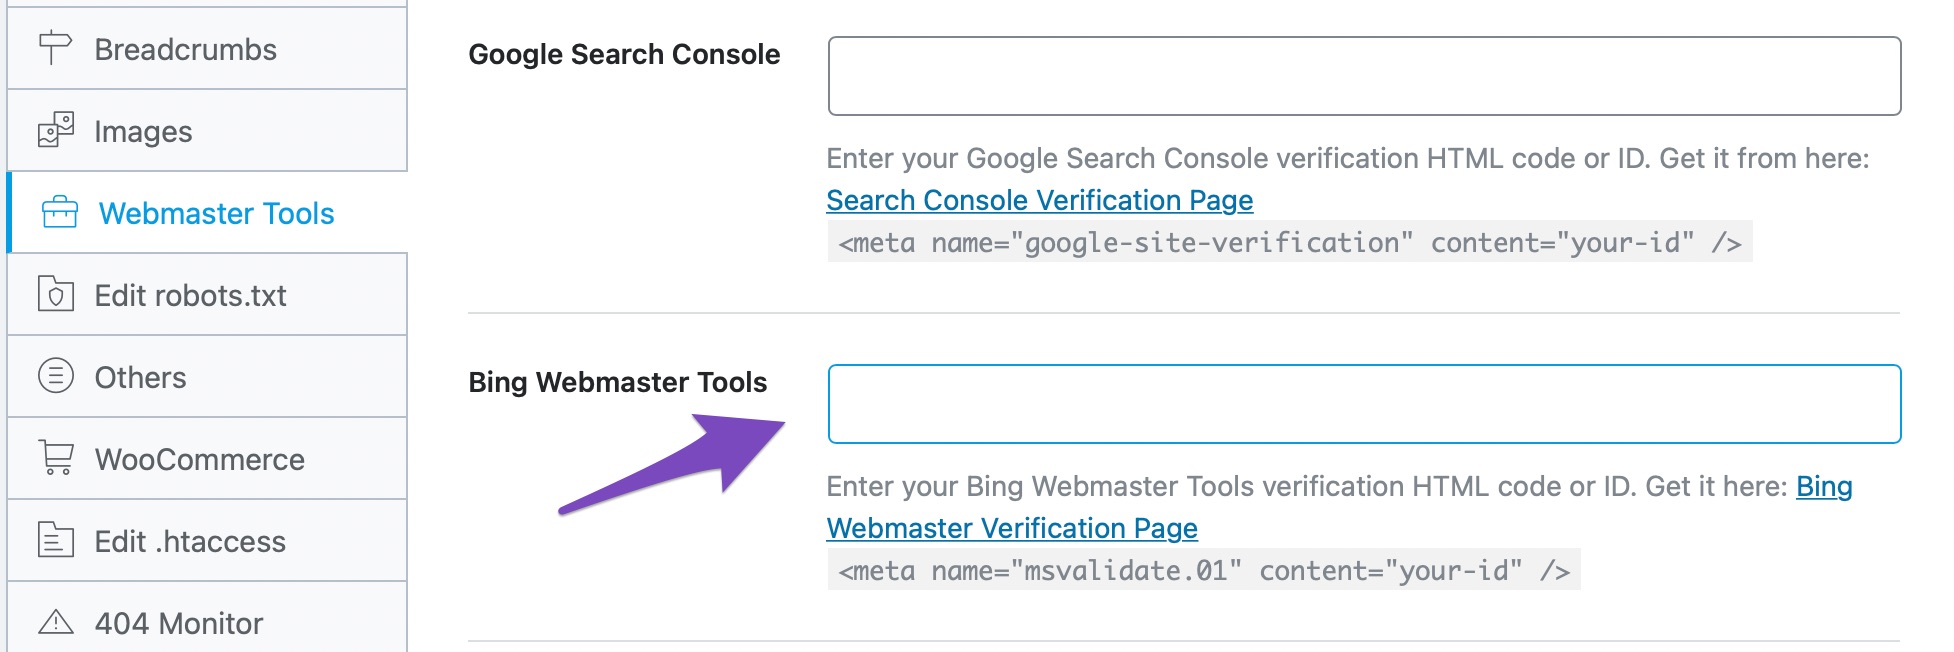 Add Bing Webmaster Tools verification code